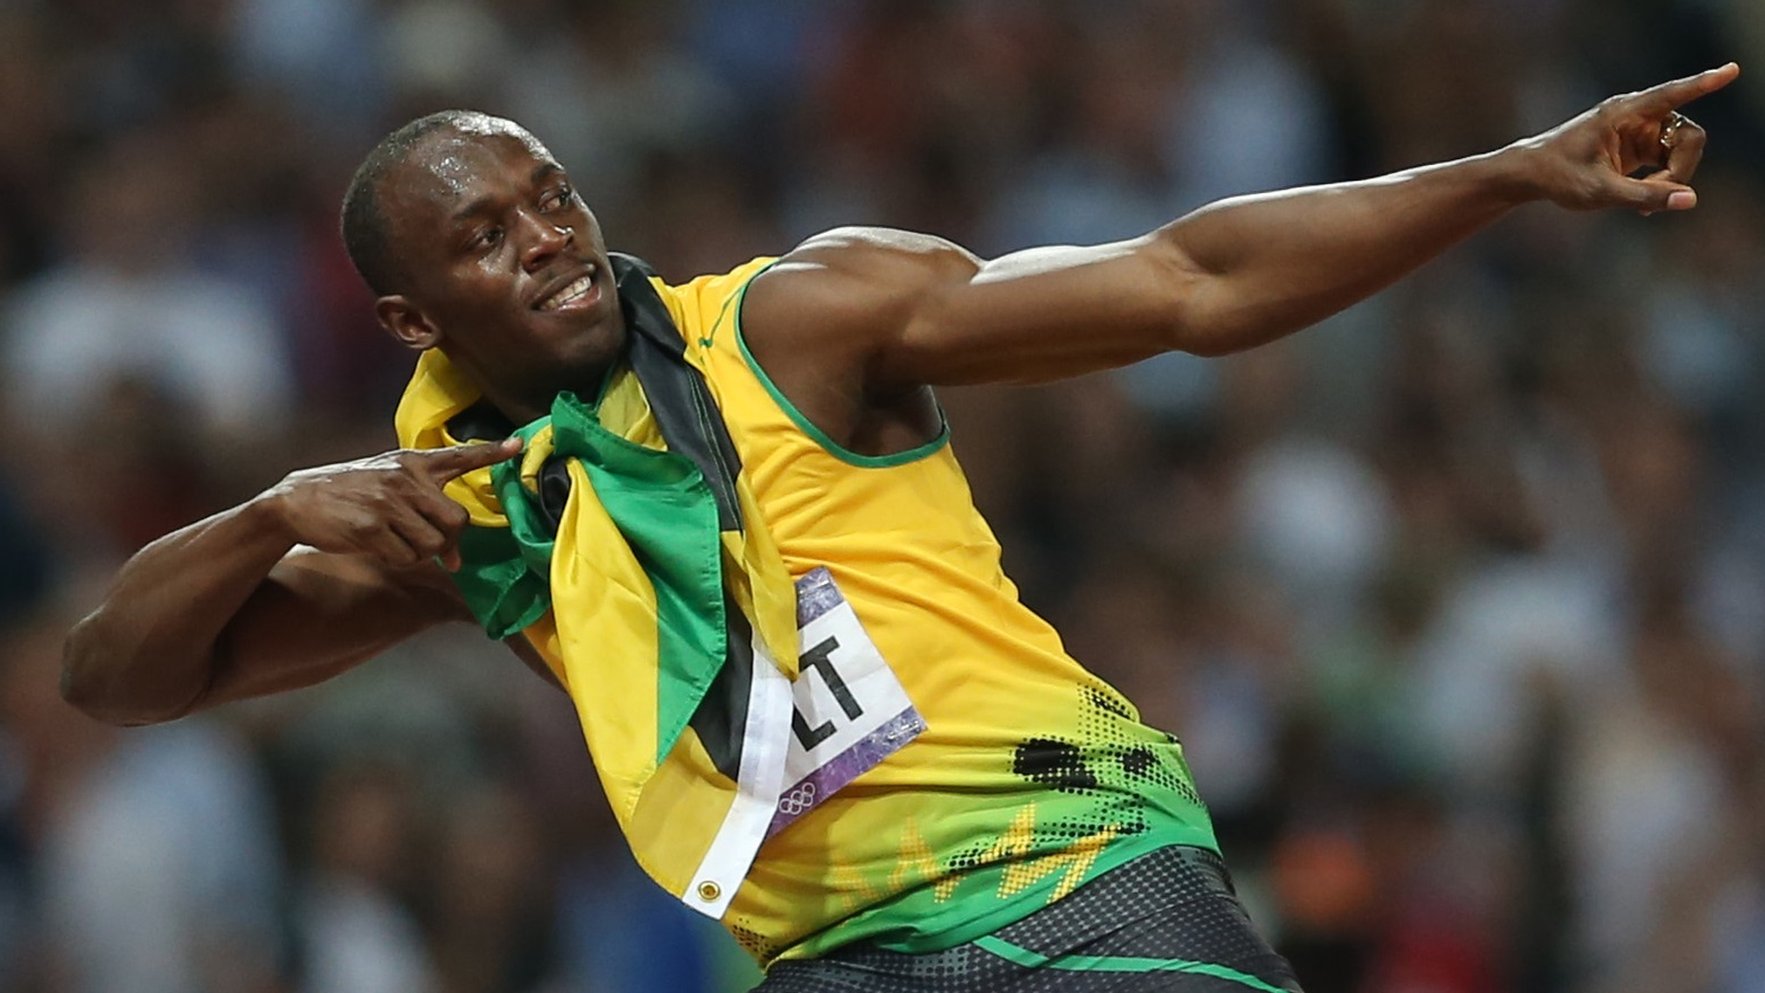 Usain Bolt | Usain bolt, Victory pose, Olympics